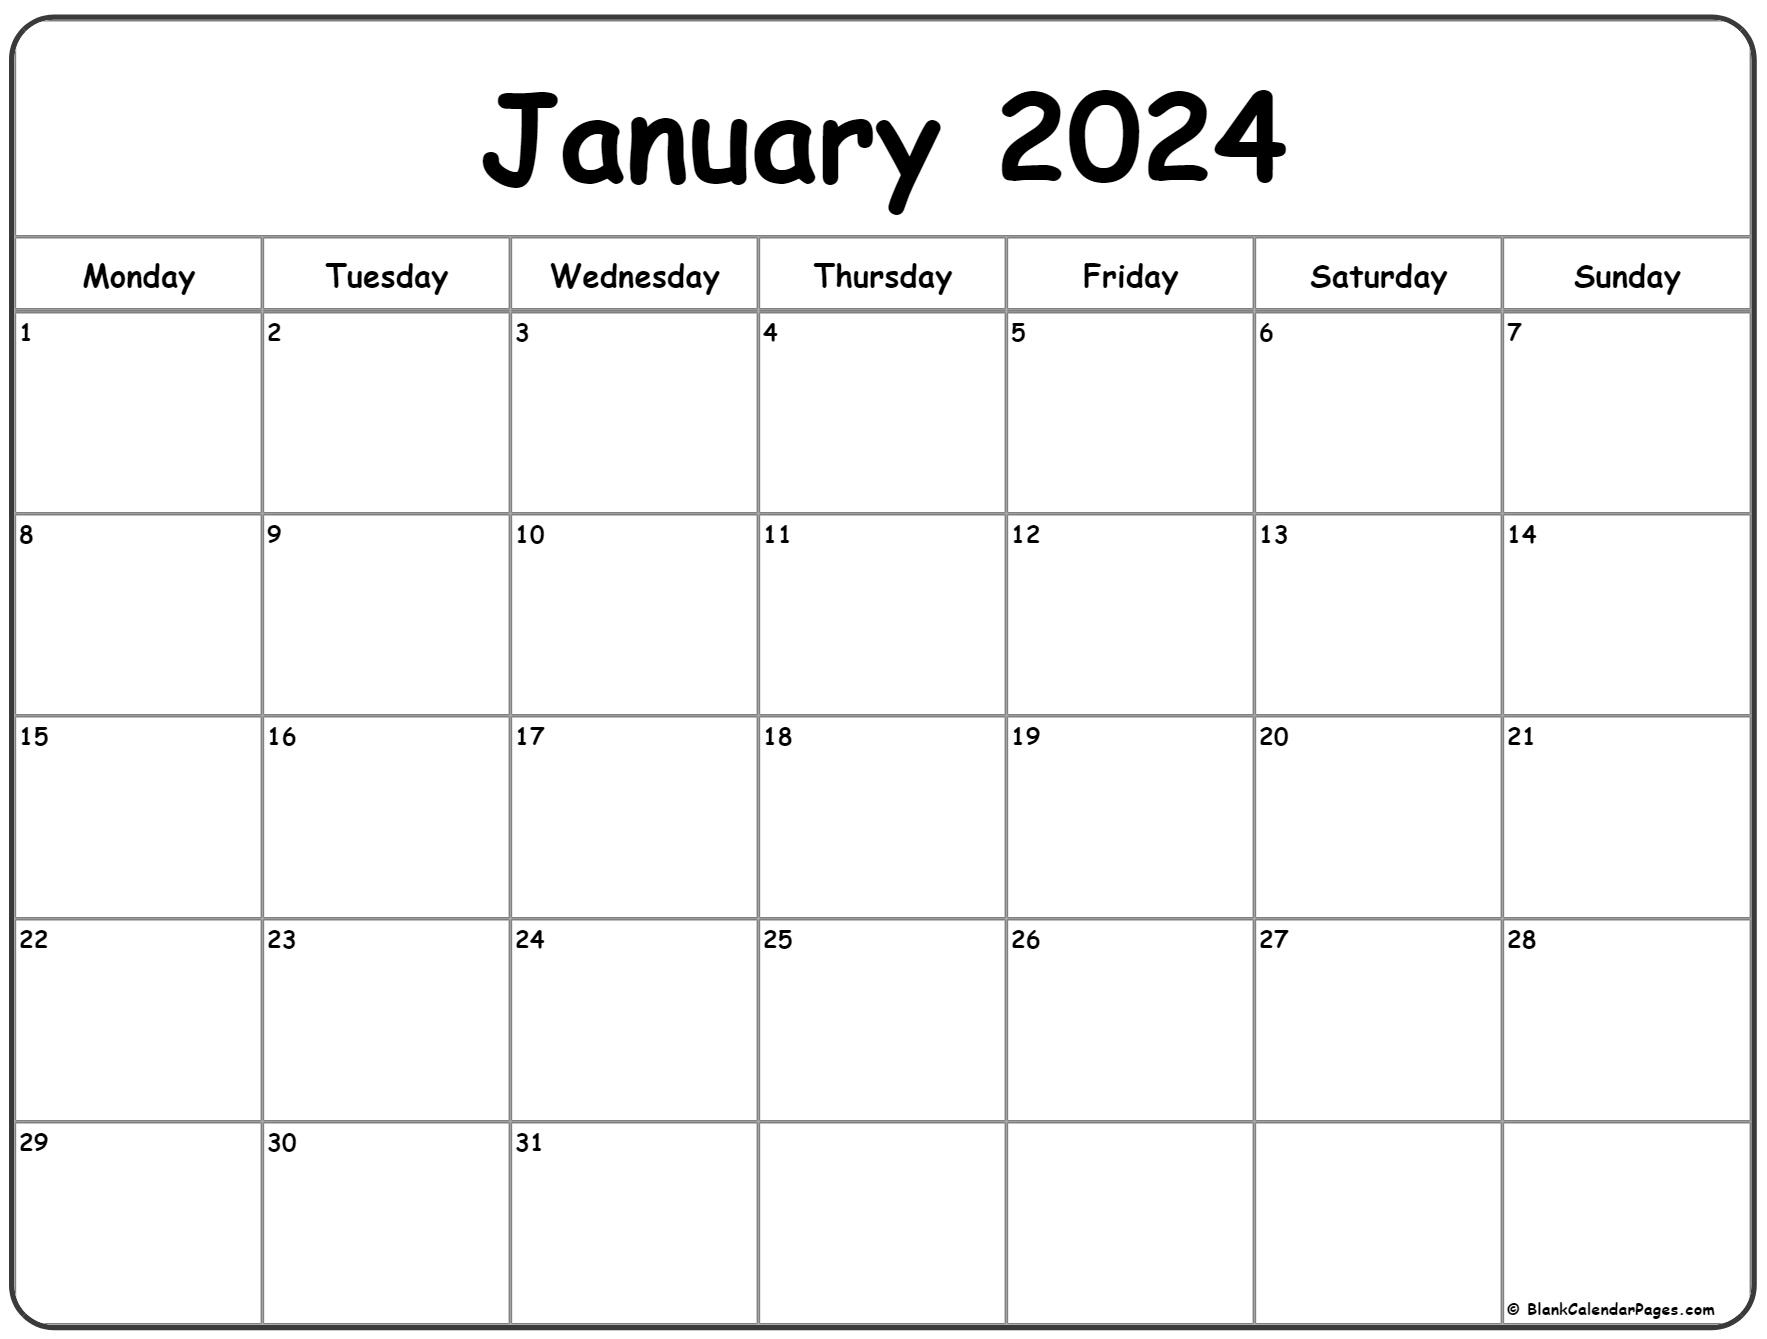 January 2024 Monday Calendar | Monday To Sunday | Printable Calendar 2024 Starting On Monday